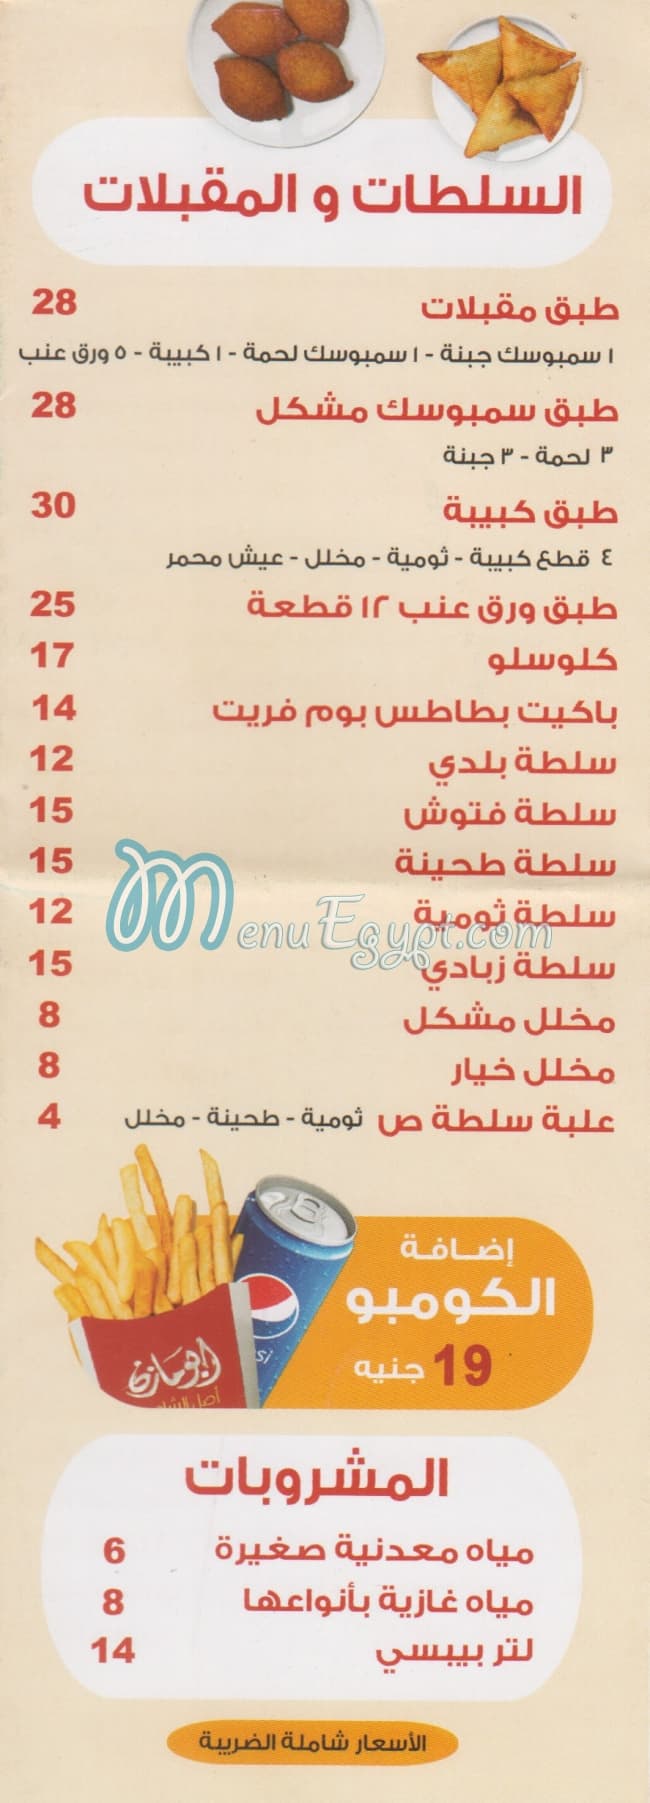 Shawrma Abu MazenTalat Harb Street menu Egypt